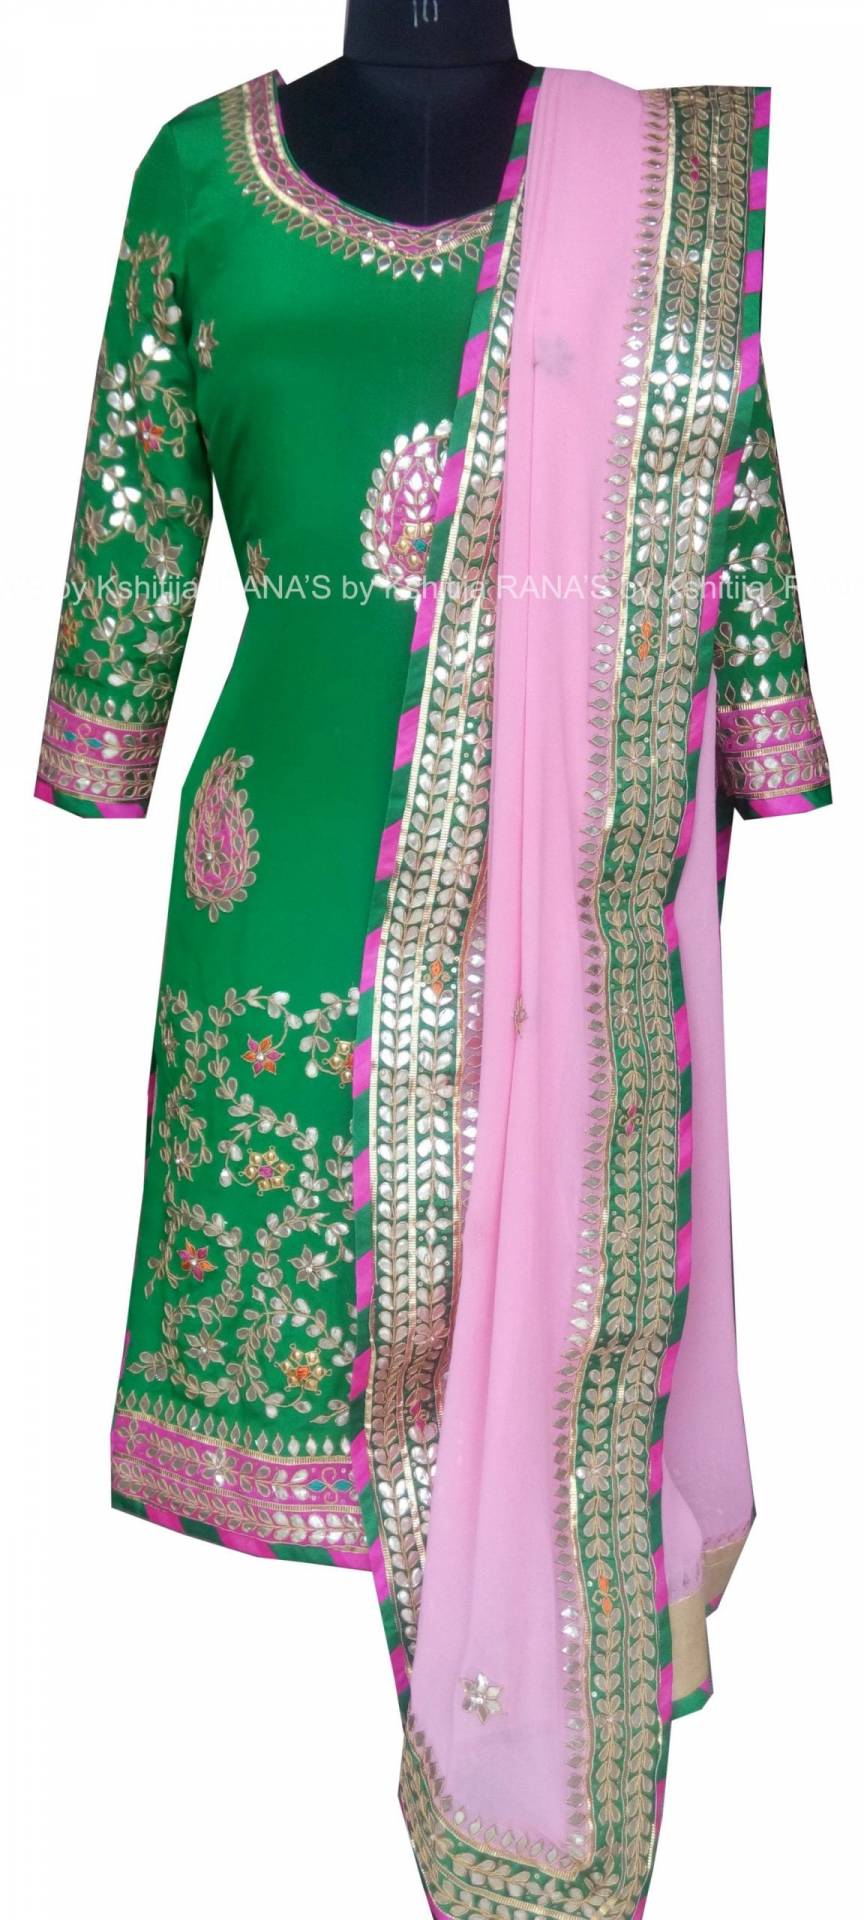 Emrald Green Pretty Salwar Suit